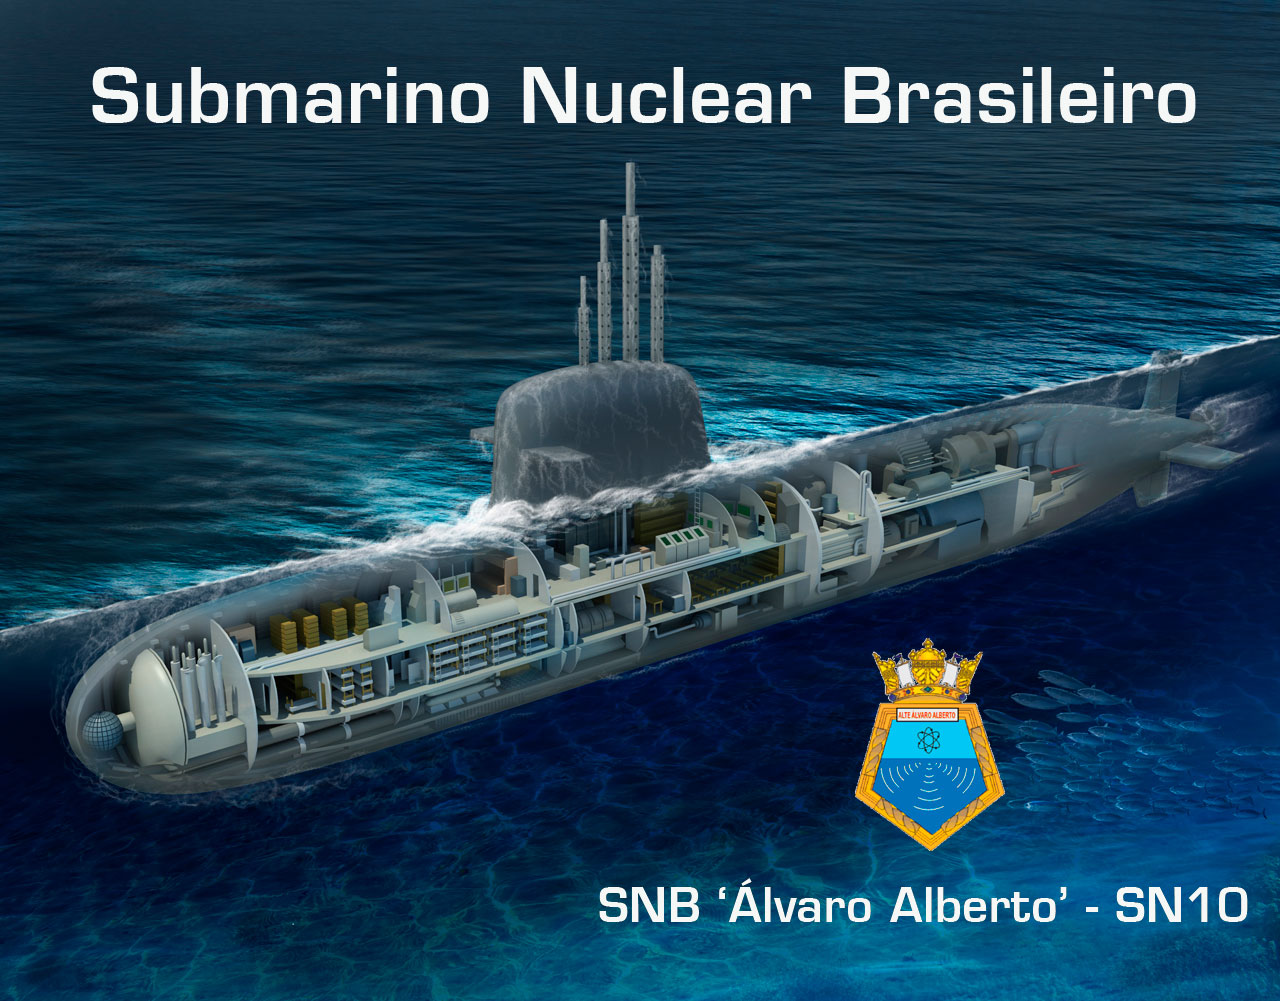 Propina de obra de submarino foi paga ao PT e a ex-almirantes, diz Odebrecht